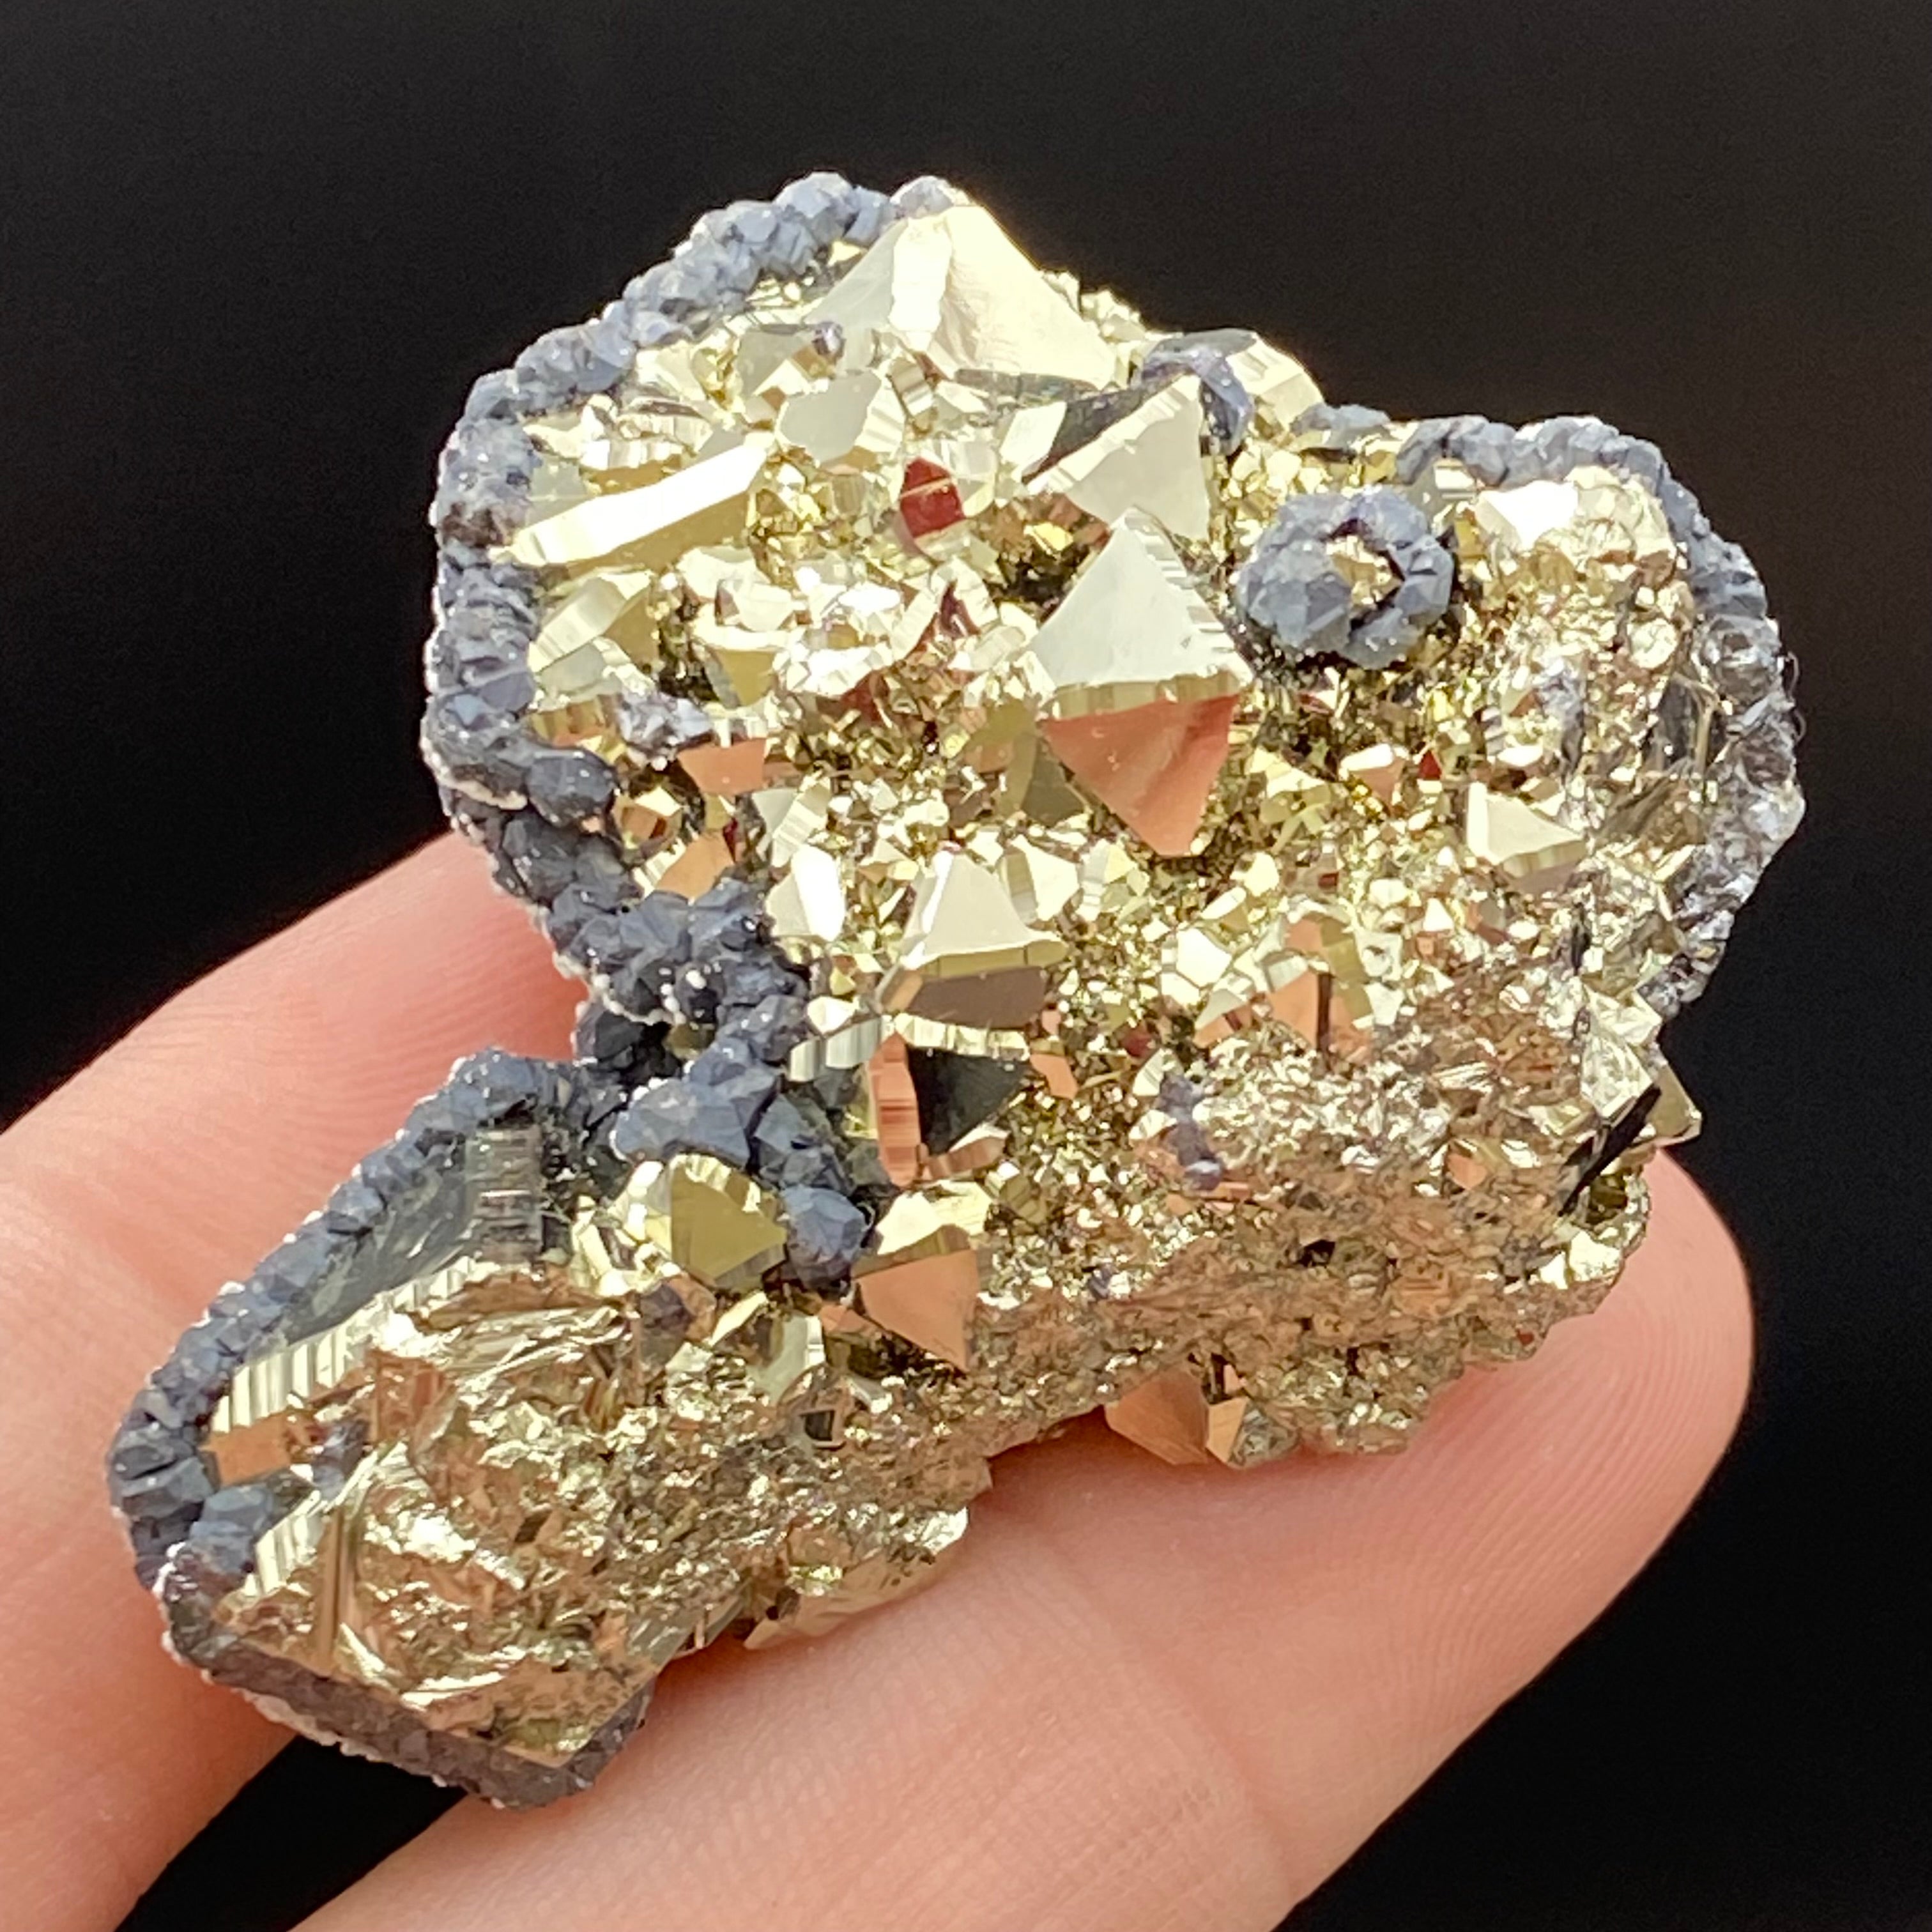 Peruvian Pyrite Crystal - 008